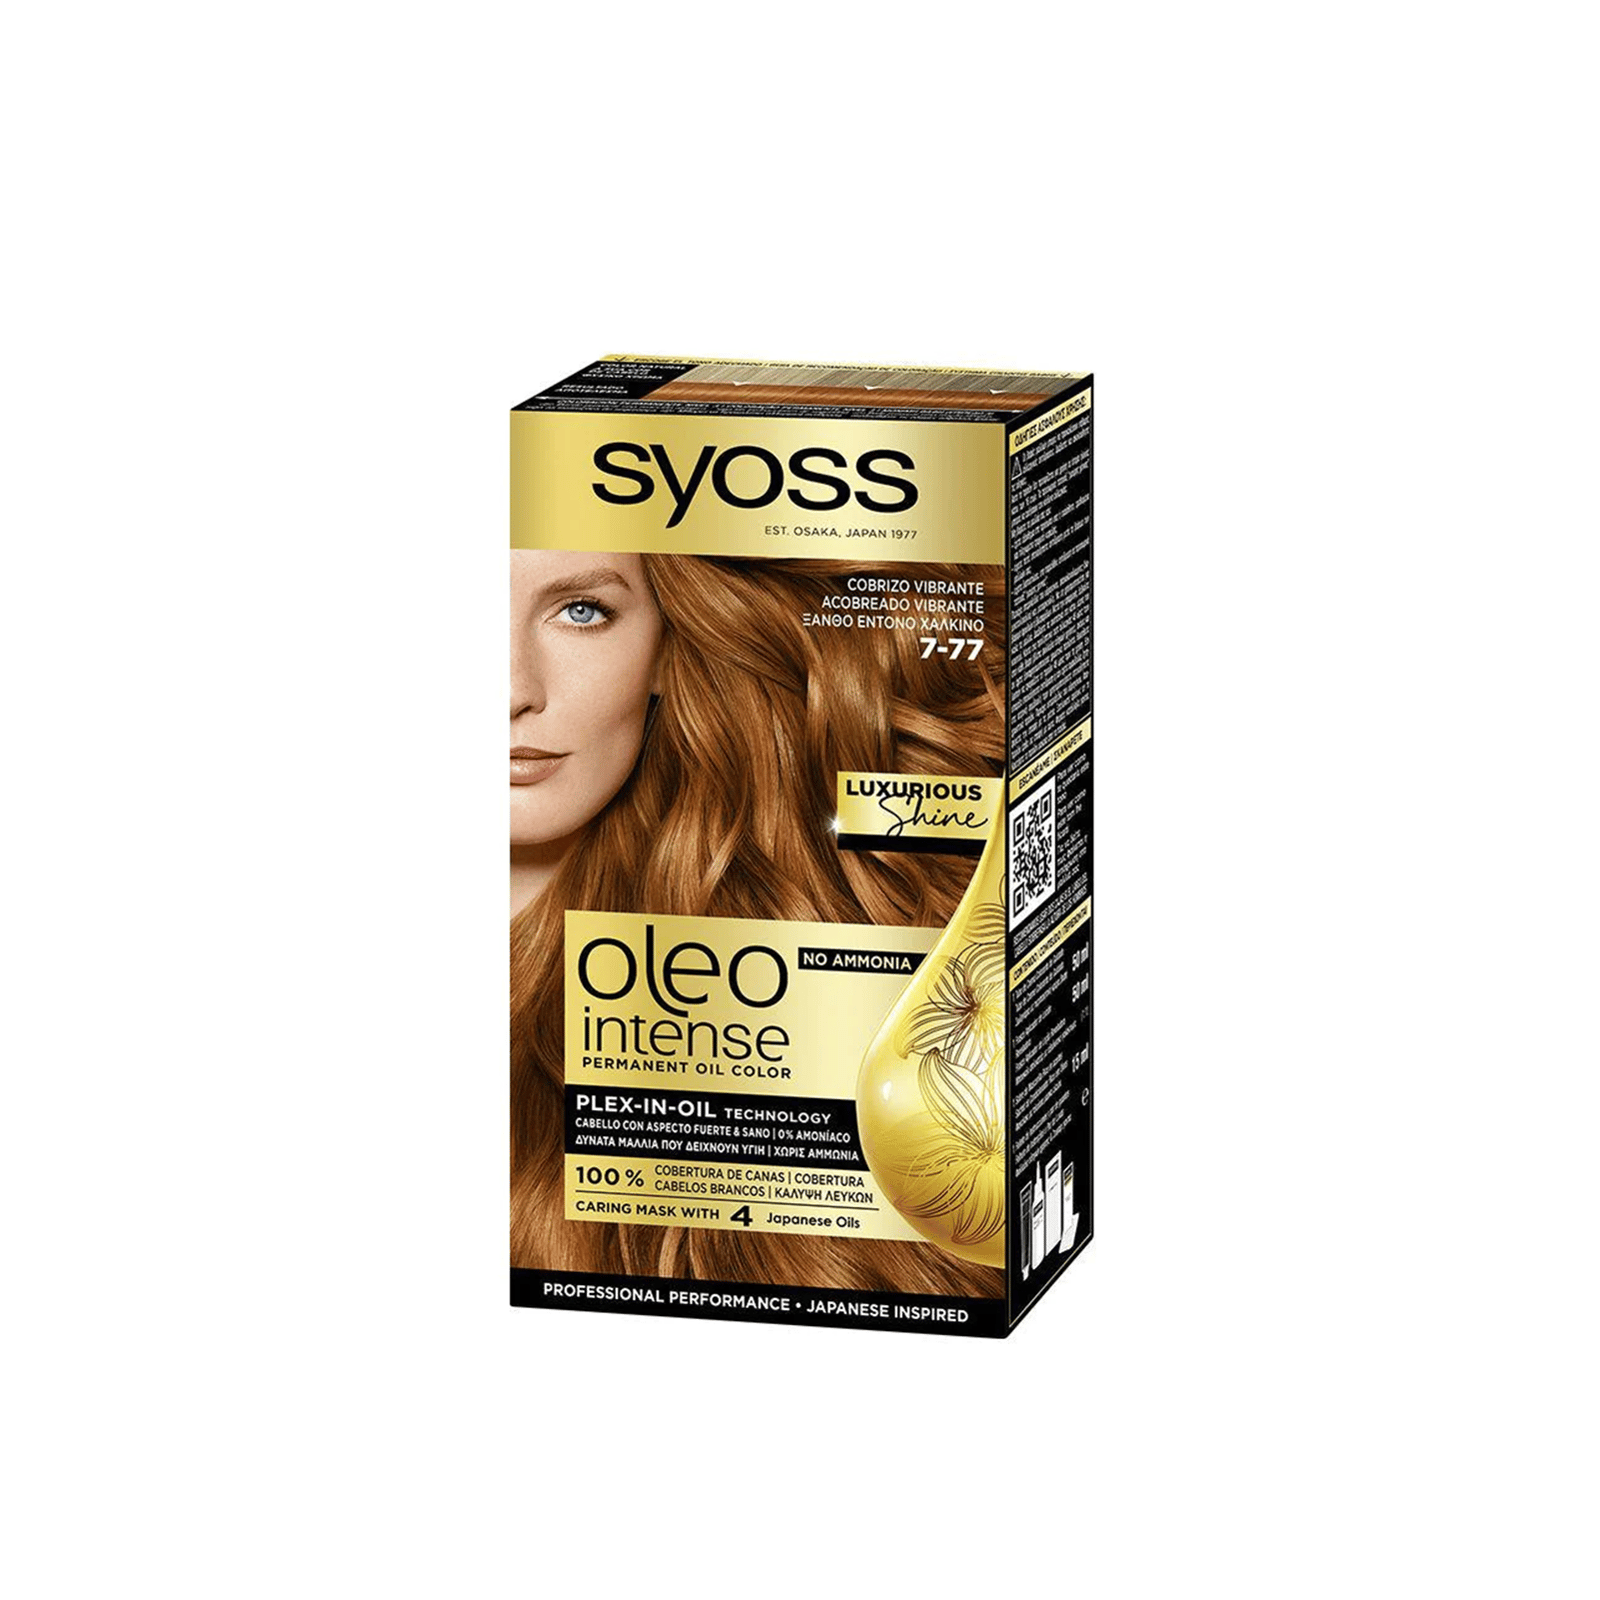 Syoss Oleo Intense Permanent Oil Color 7-77 Vibrant Copper Permanent Hair Dye